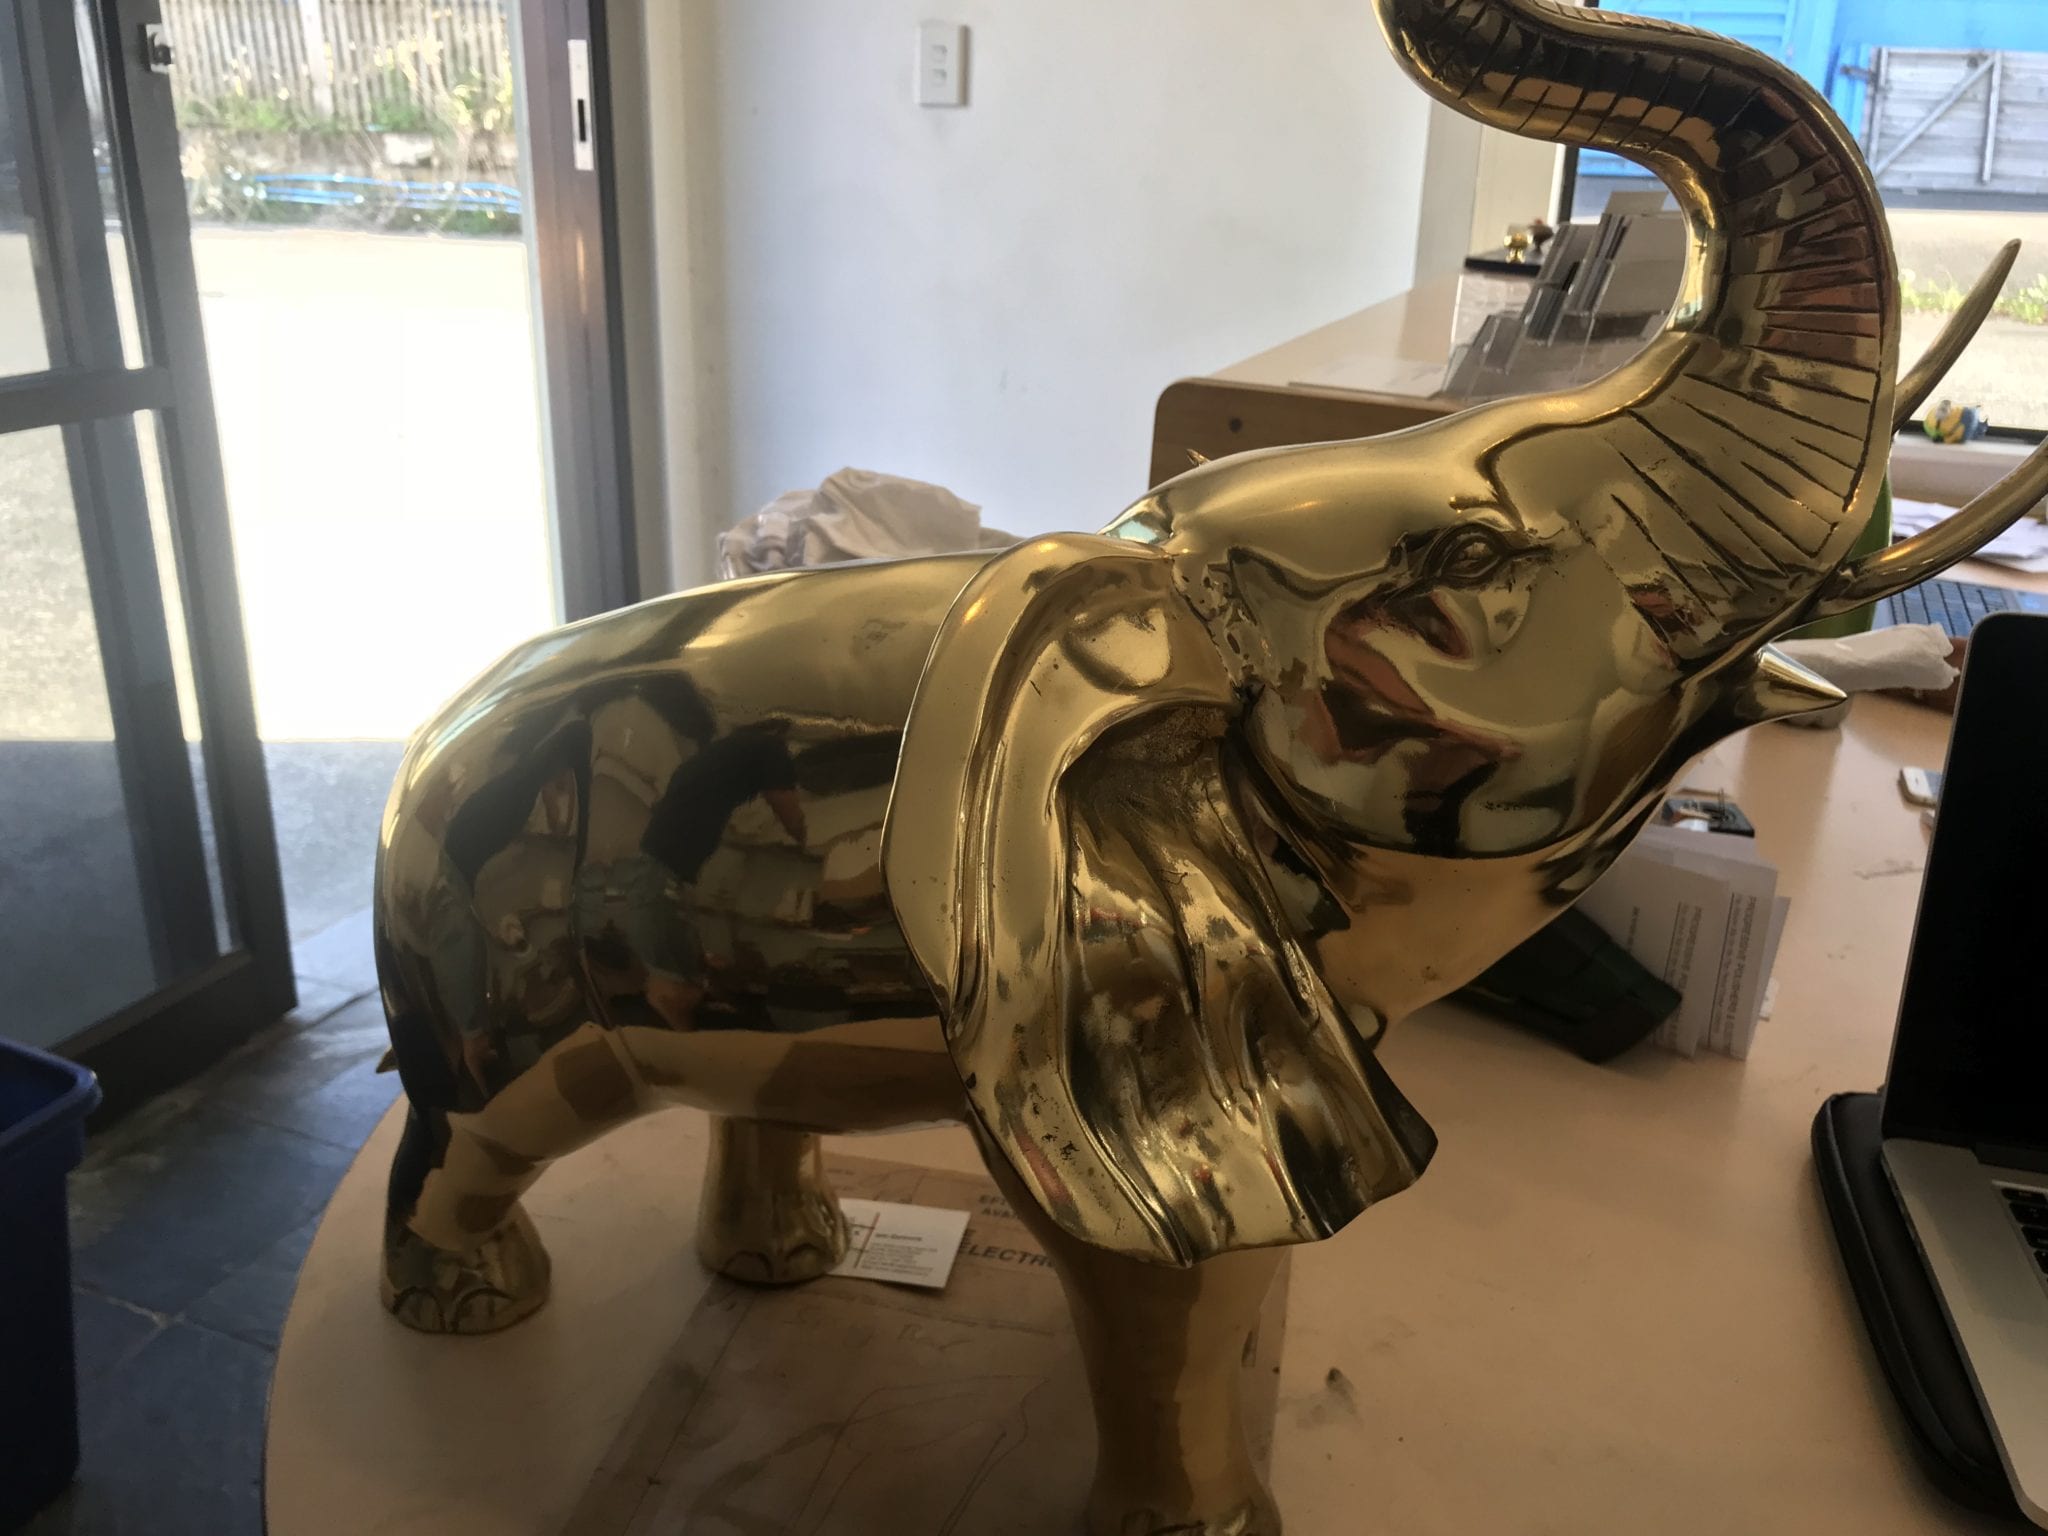 Brass polishing on animal ornaments